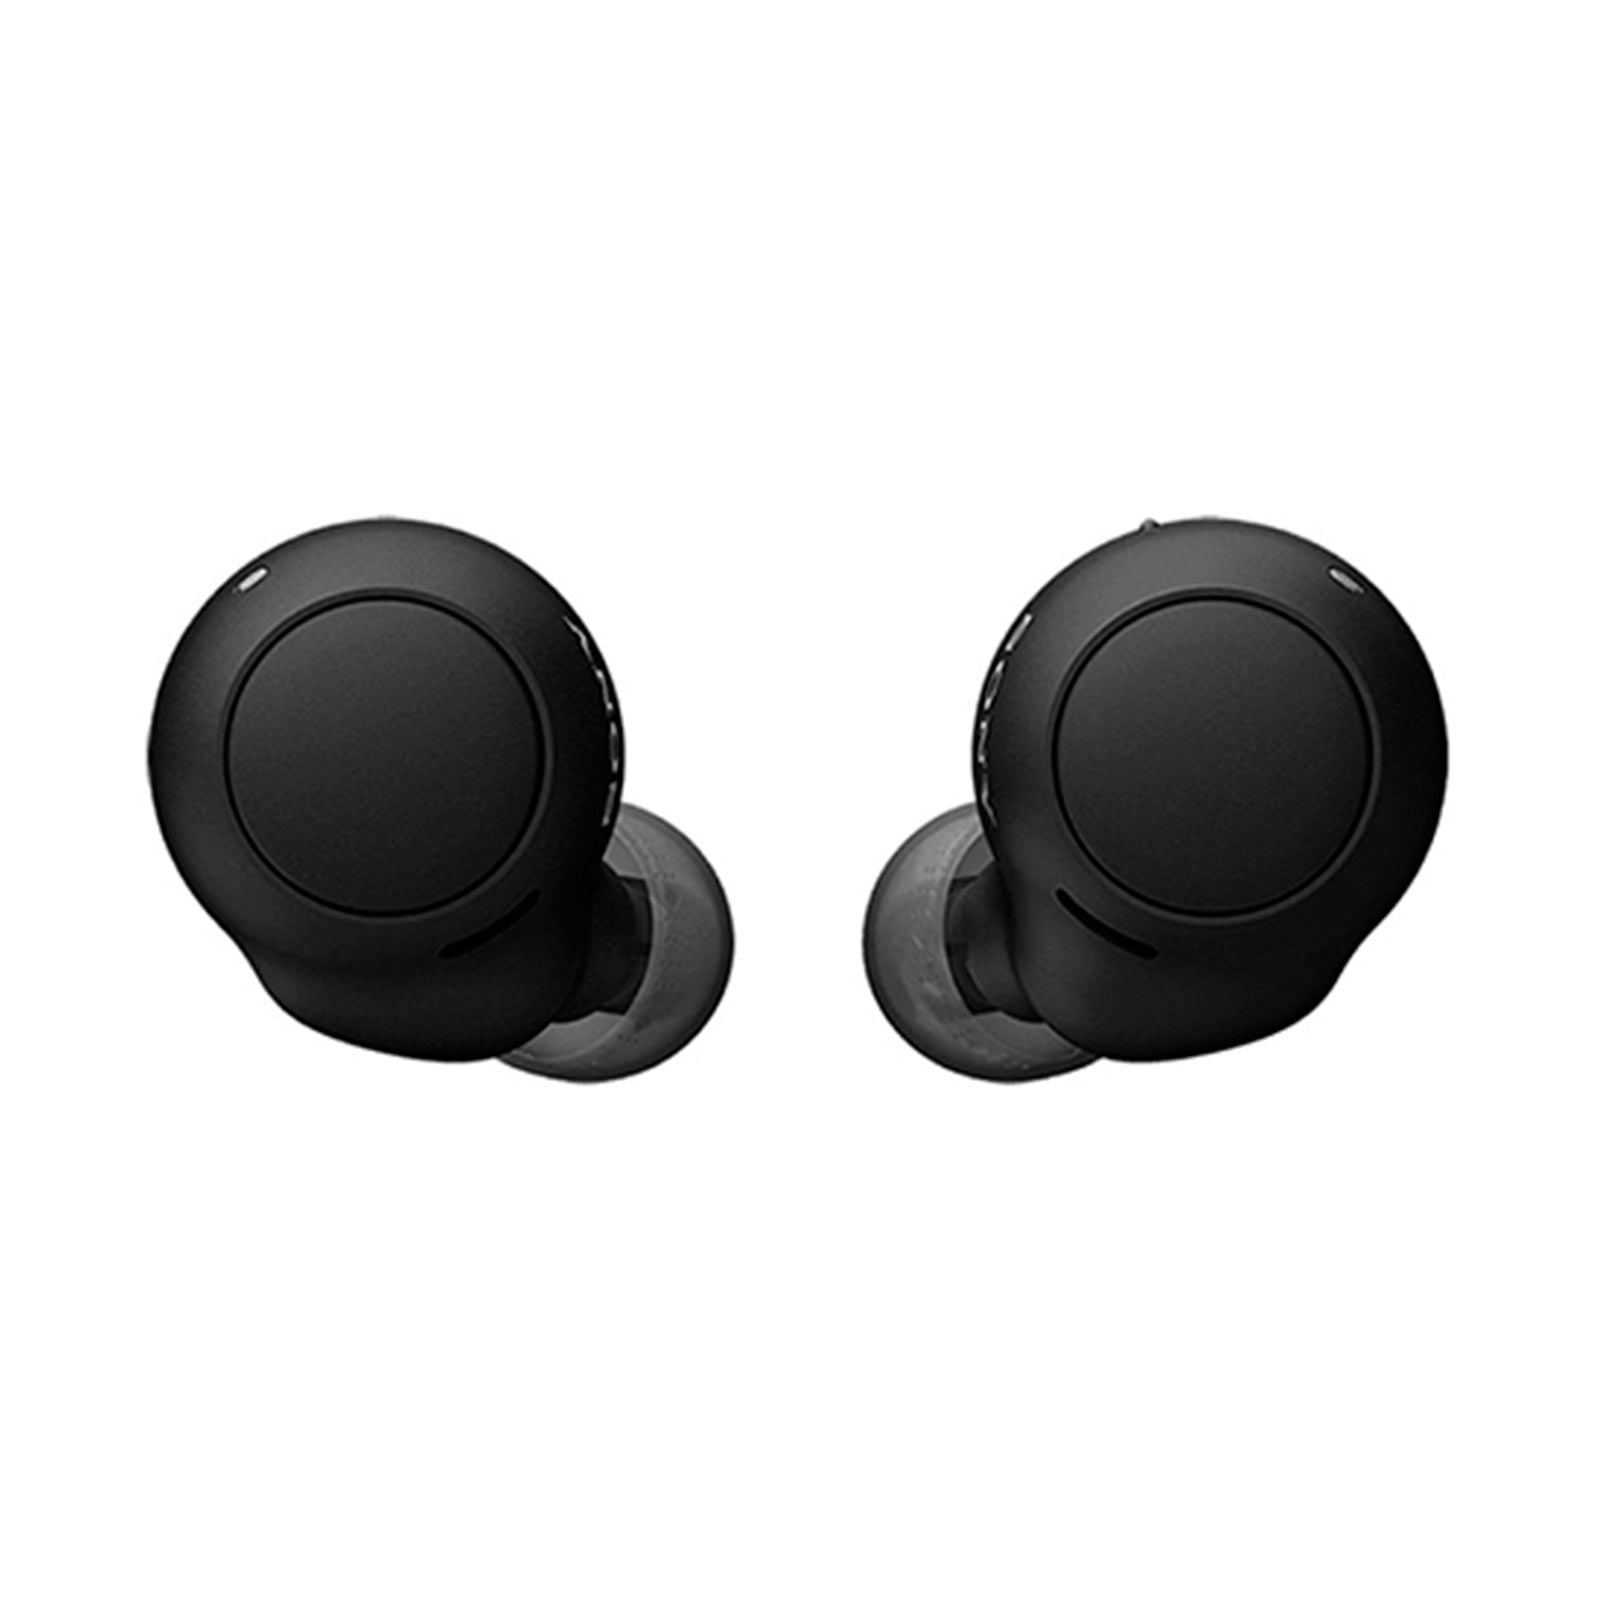 Audífonos in ear Sony LinkBuds S WFLS900N, negros